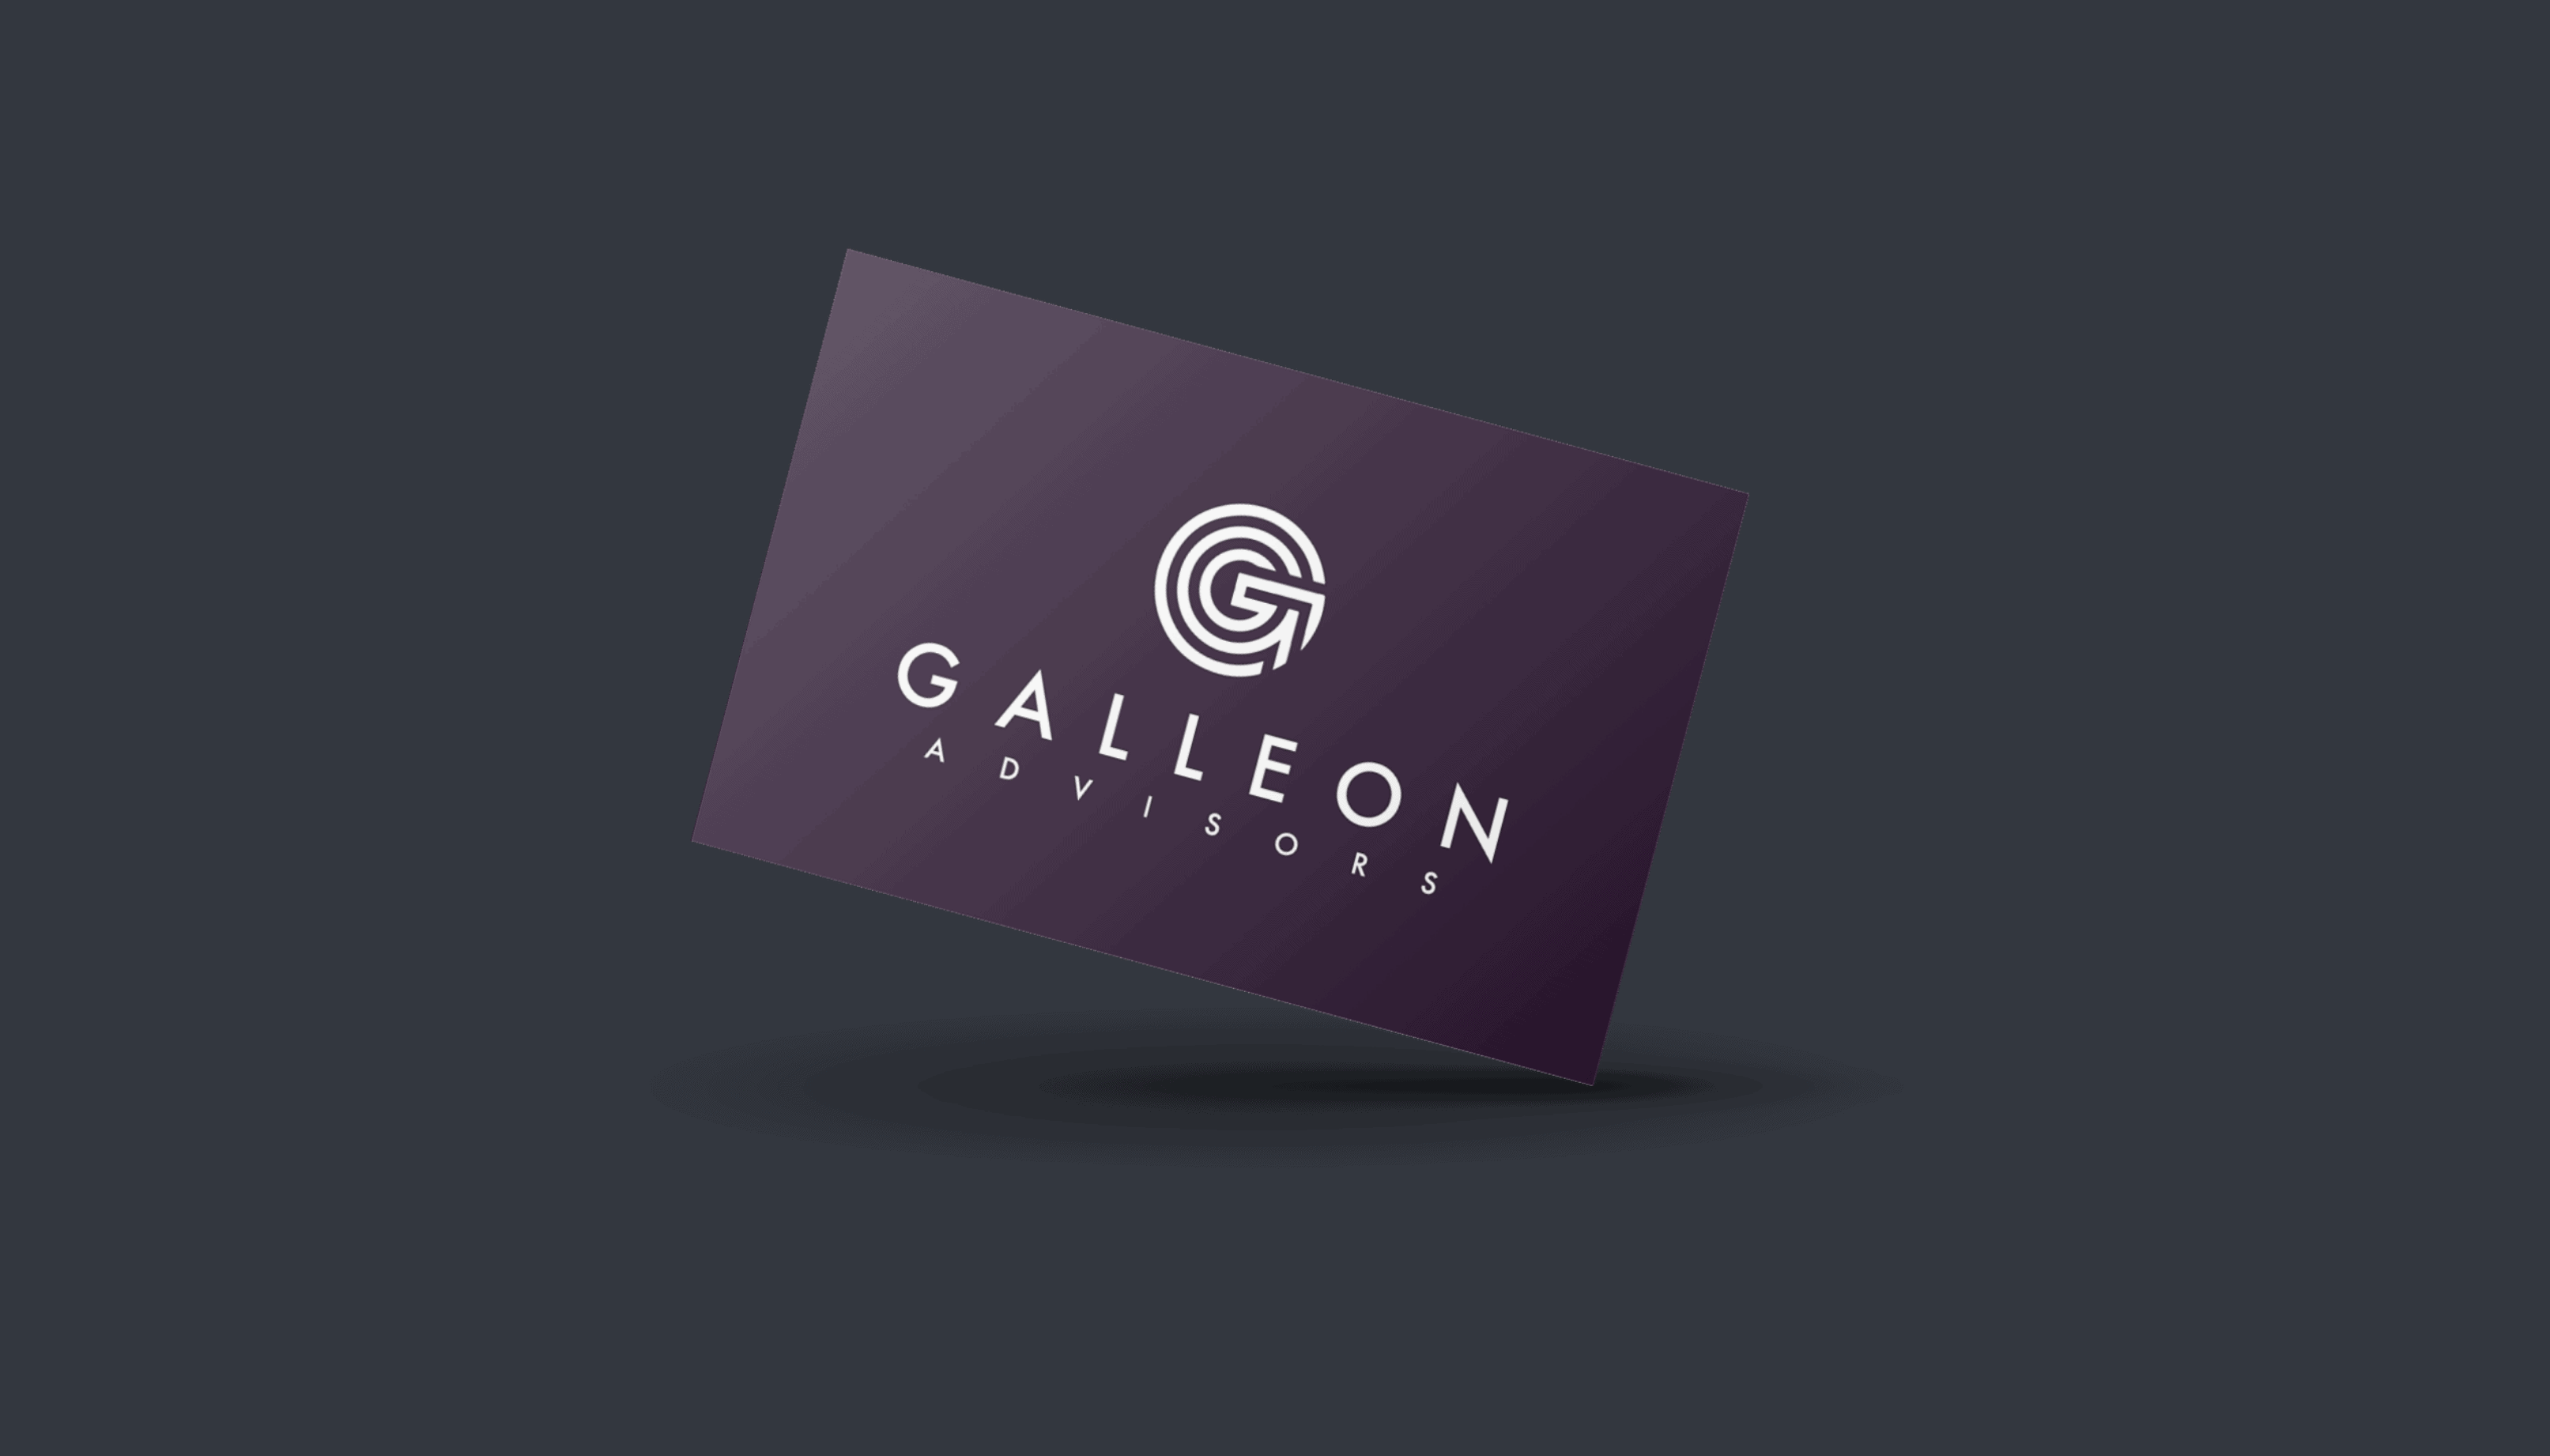 Galleon - Brand strategy and web design by MOKA Creative